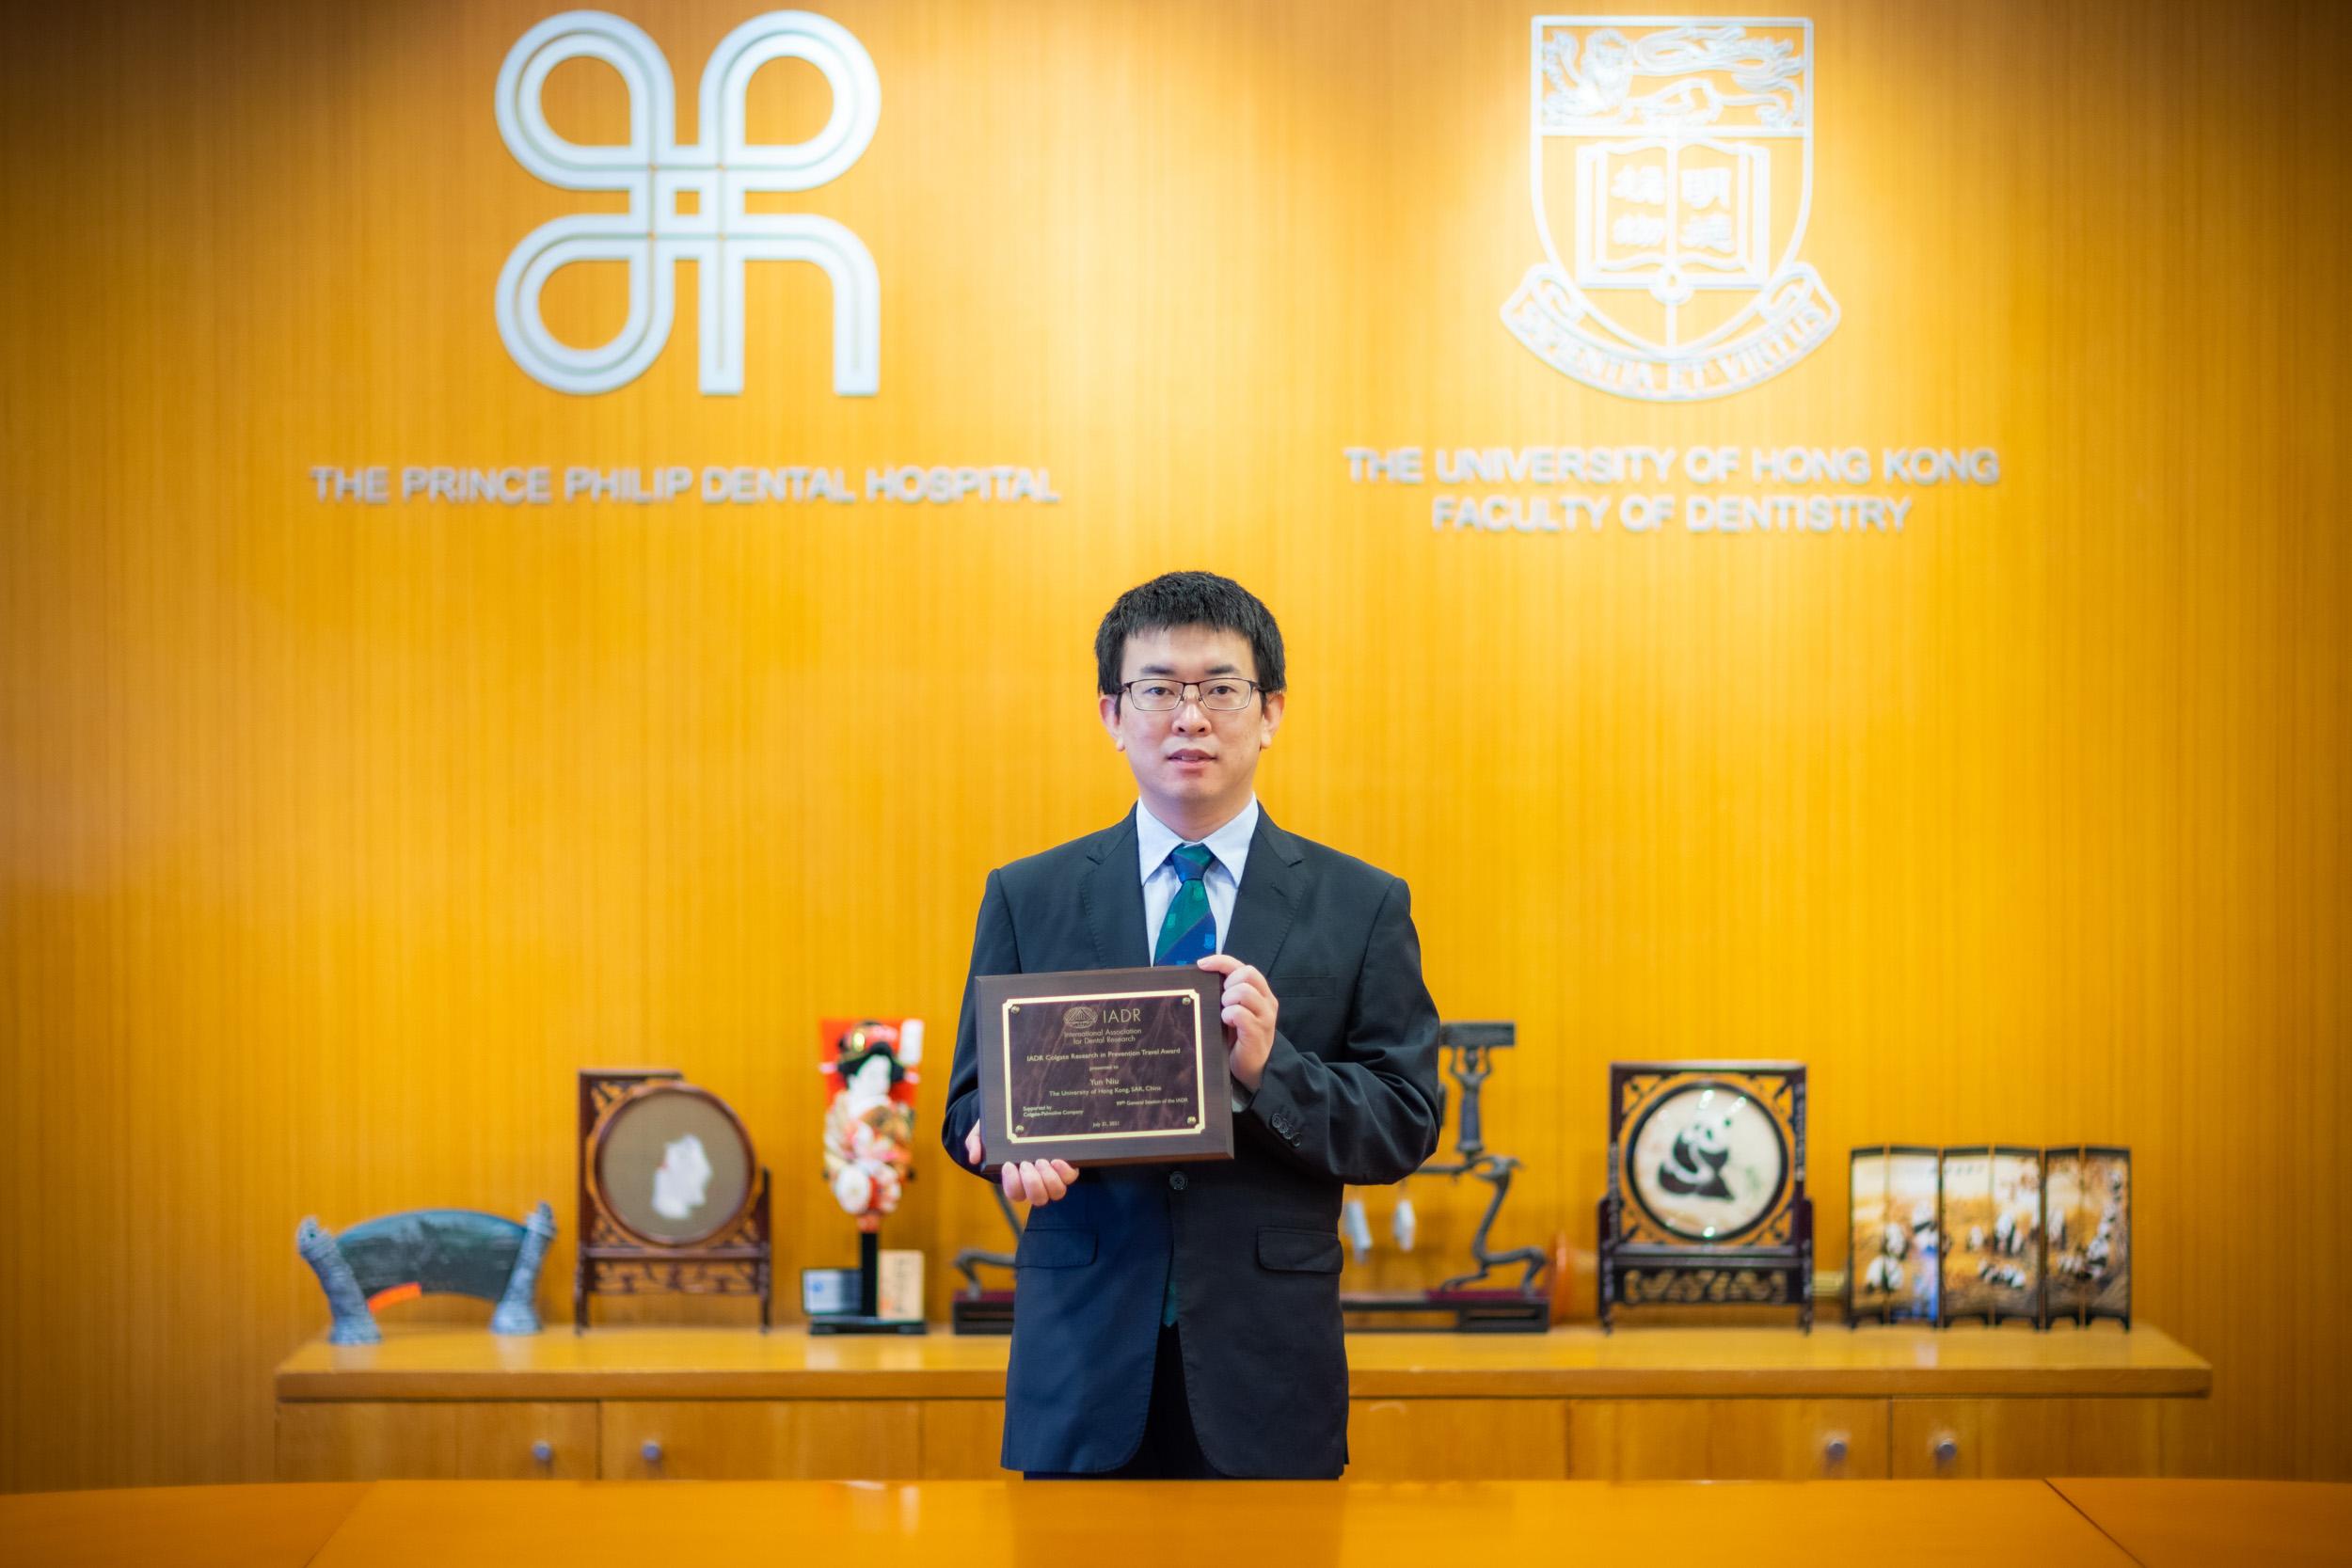 John Niu 先生 - 香港大学牙科学院成员荣获国际牙科研究协会 (IADR) 颁发的著名奖项